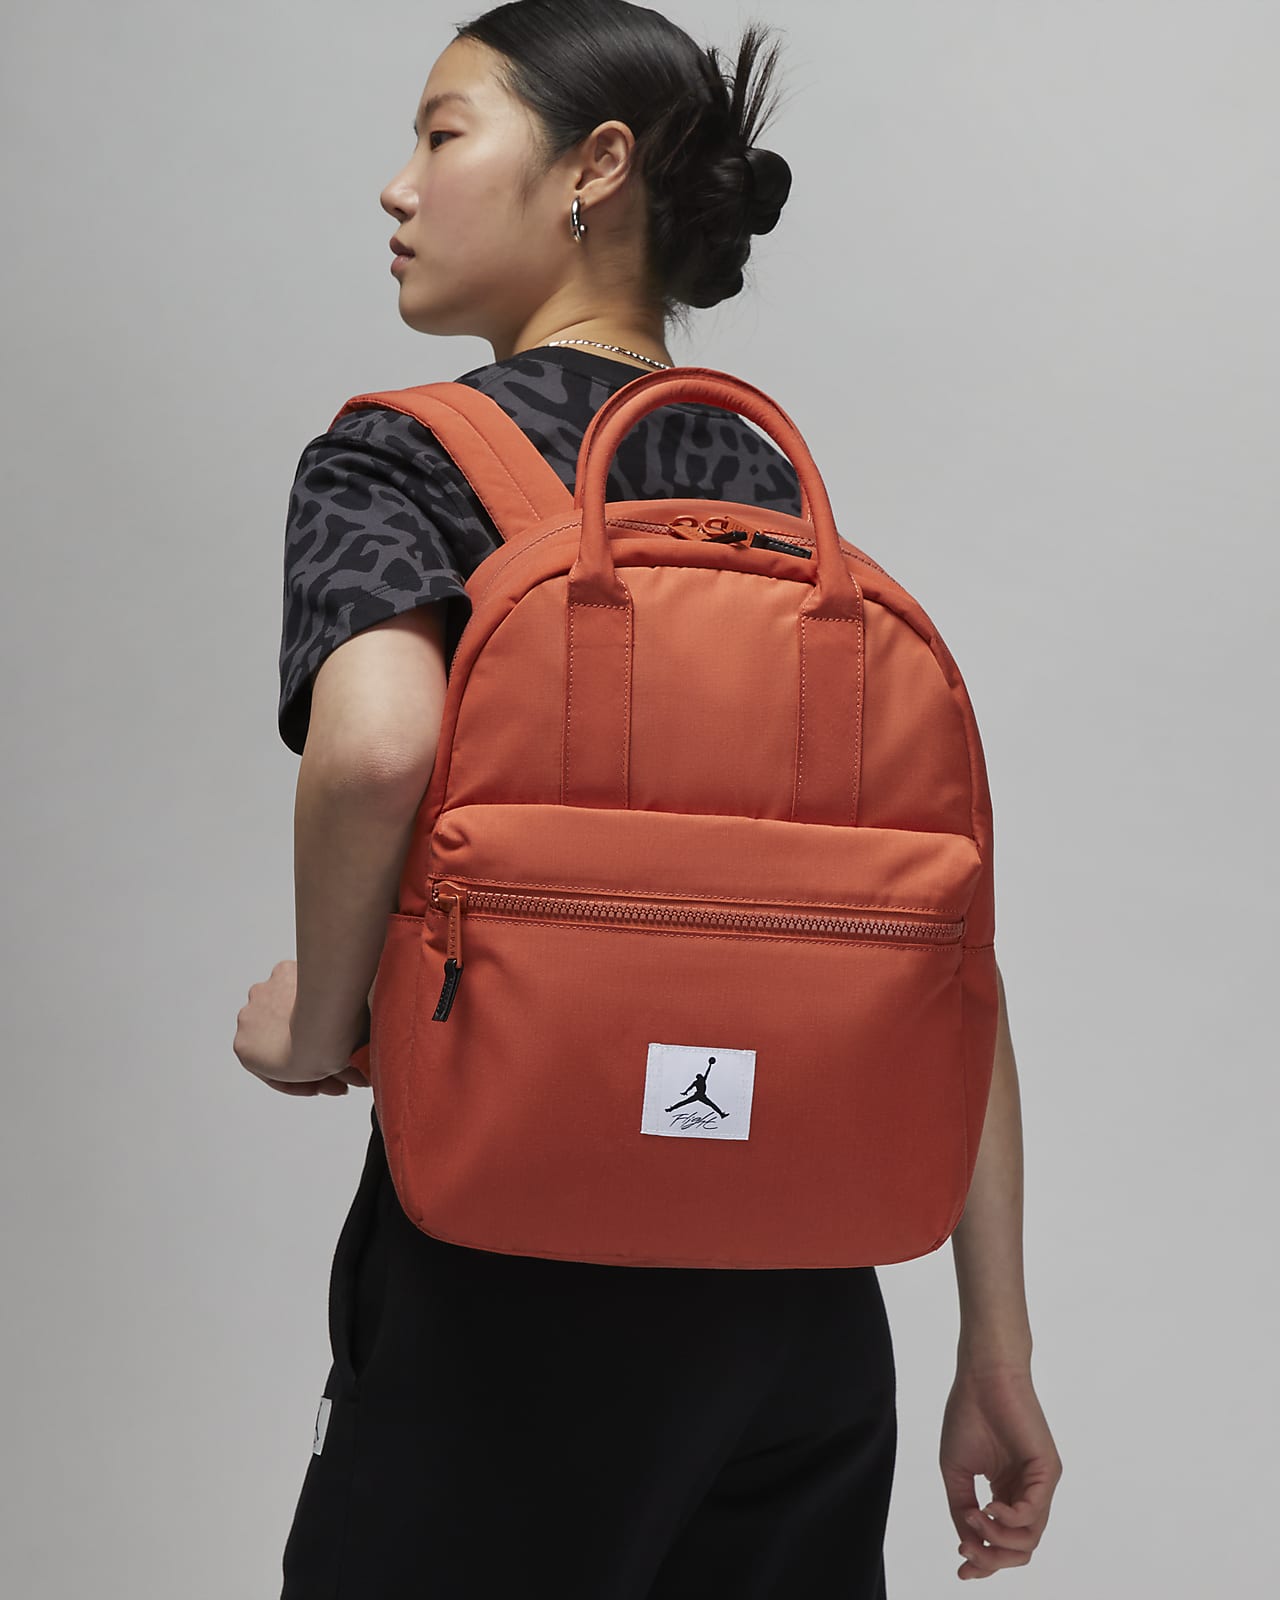 Jordan Backpack - The Best Laptop Backpack